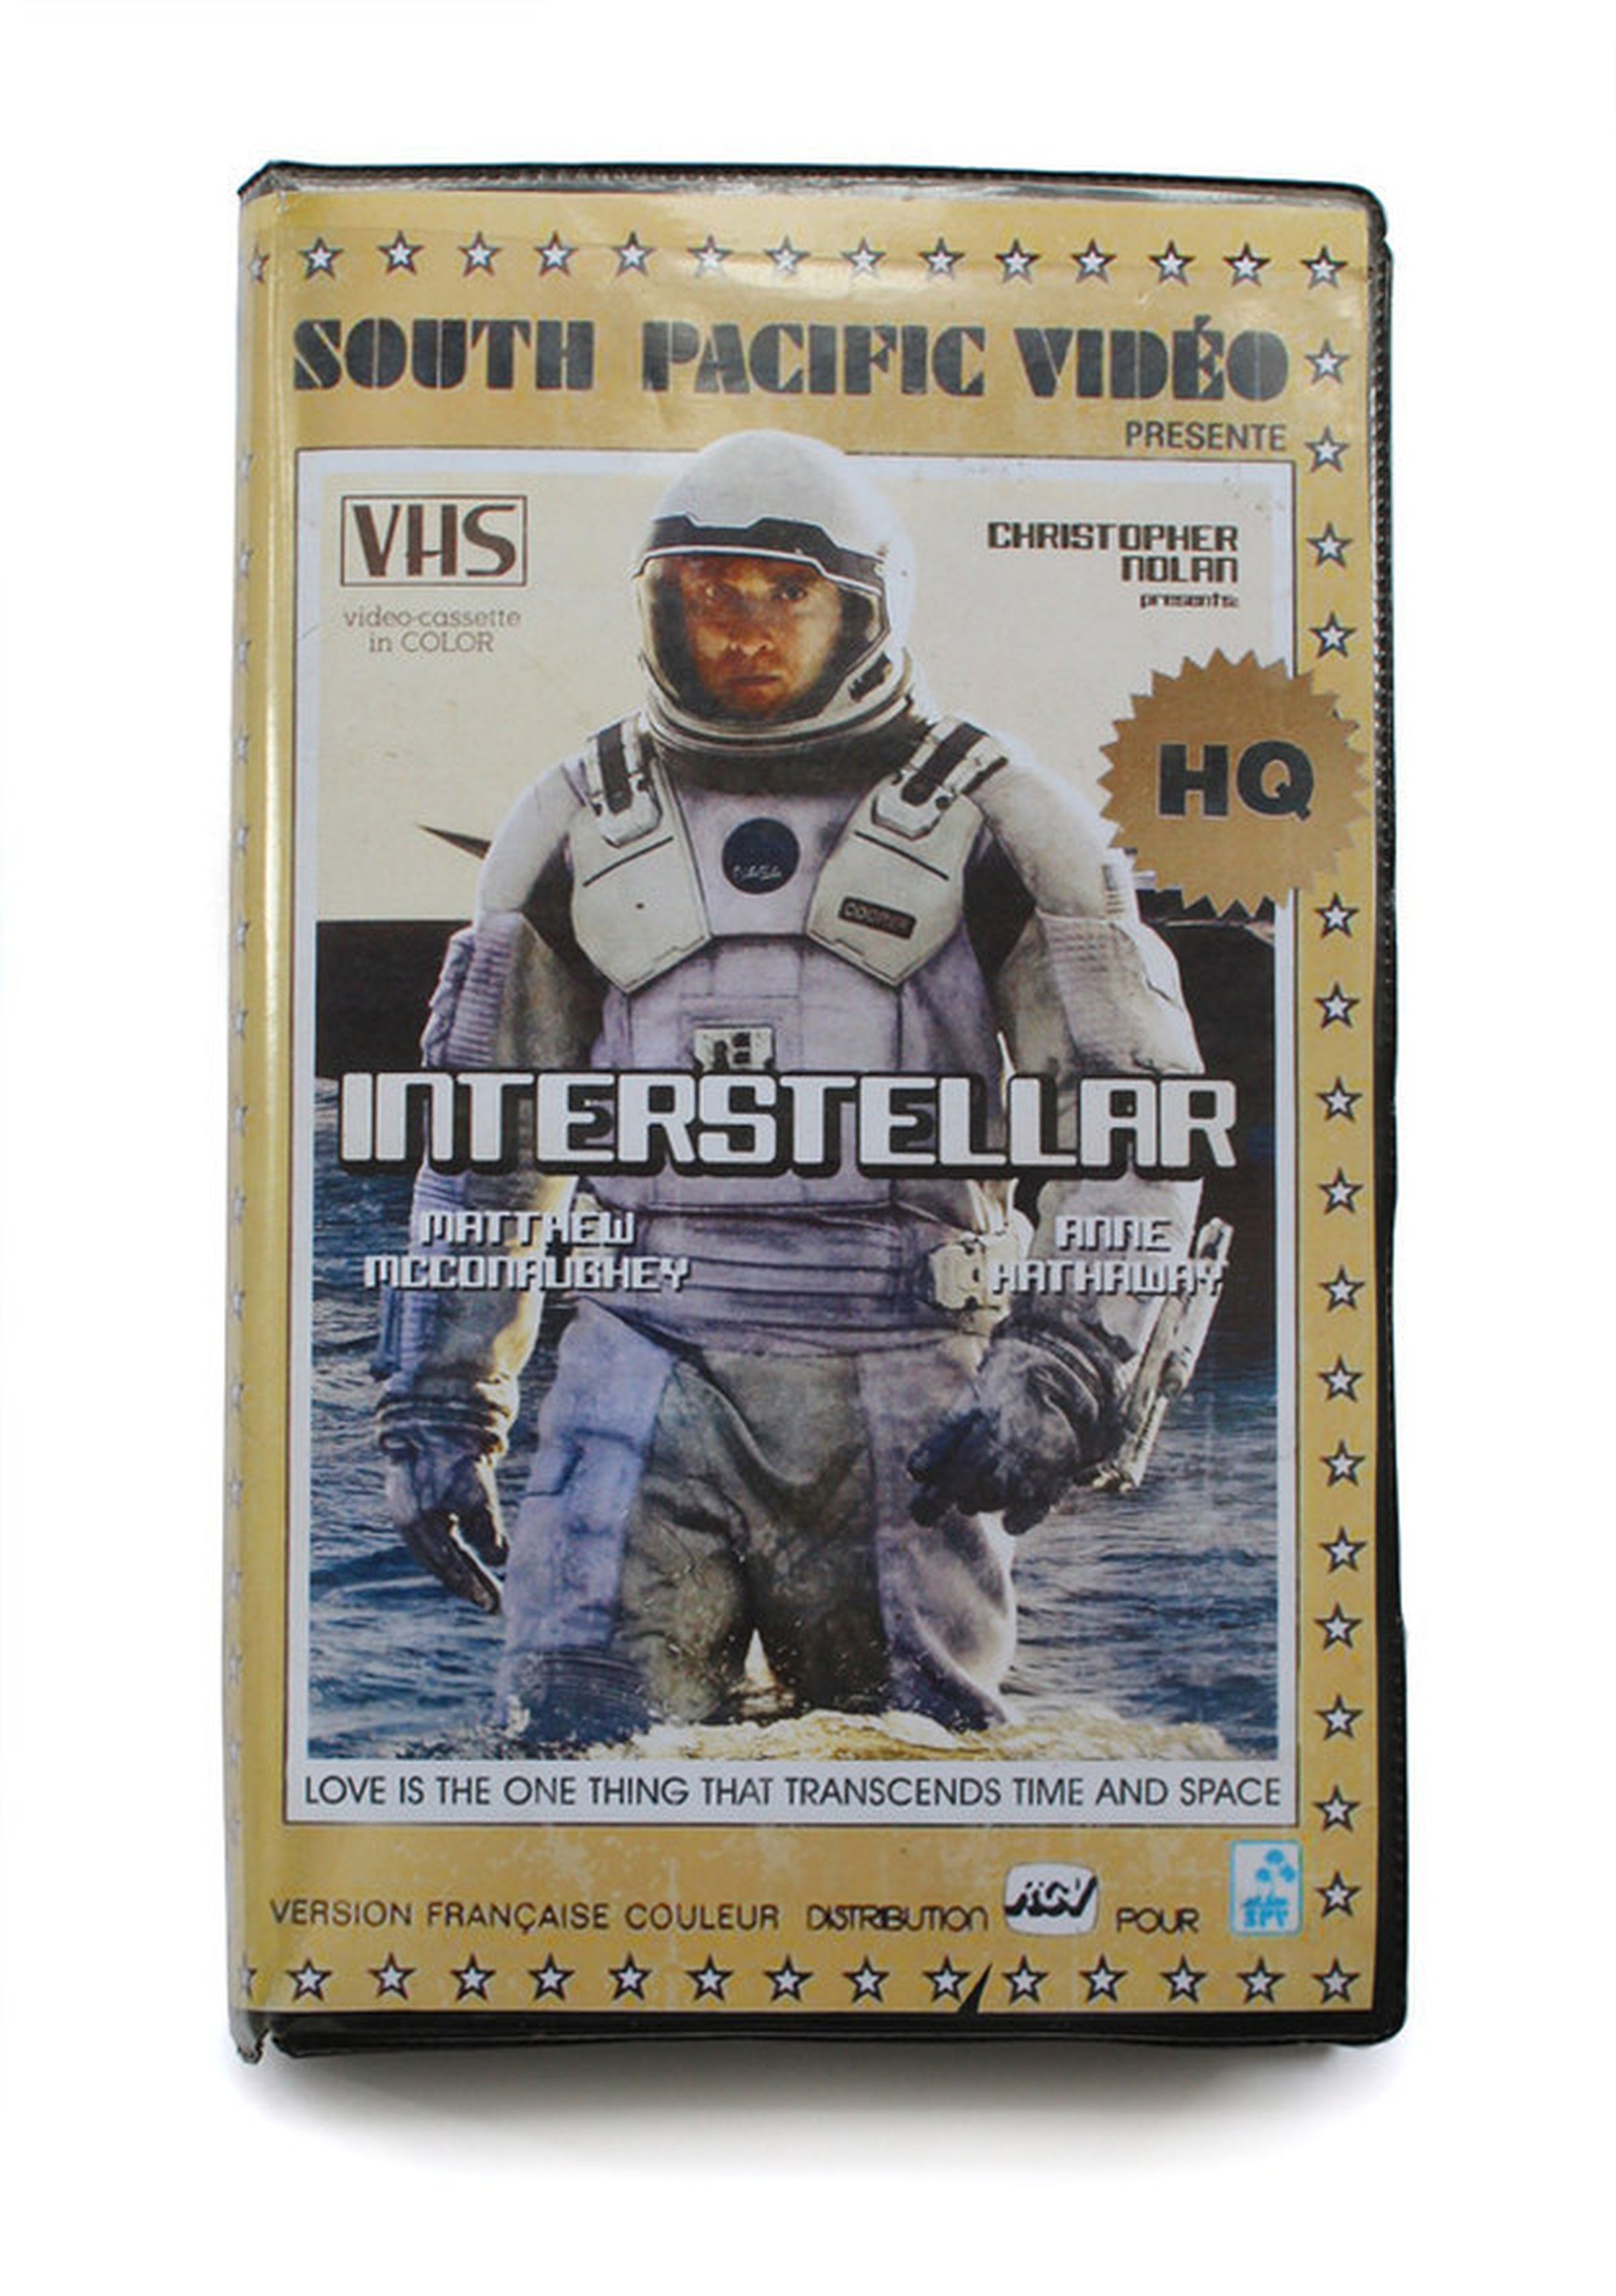 VHS box